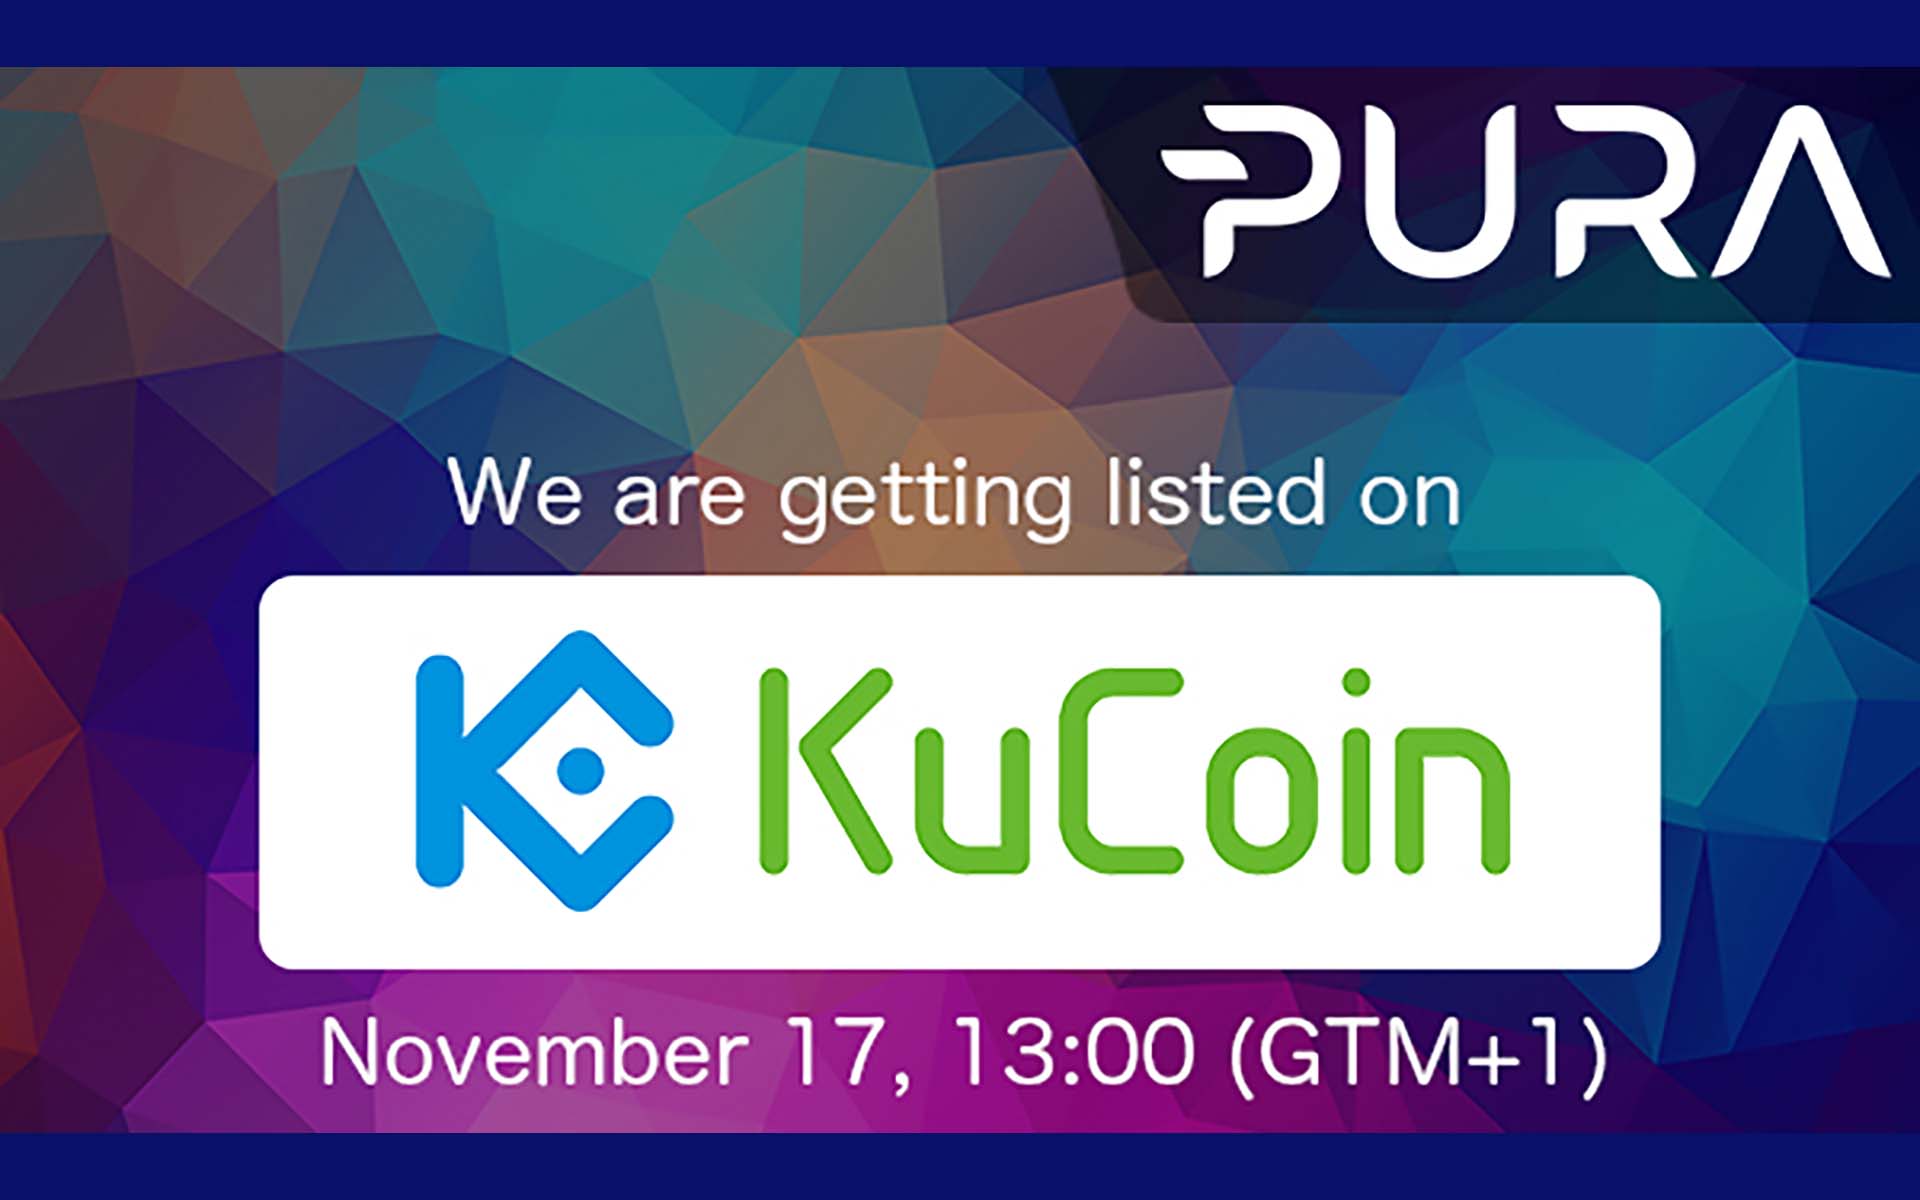 PURA to be listed on KuCoin: Trading Starts On Friday November 17